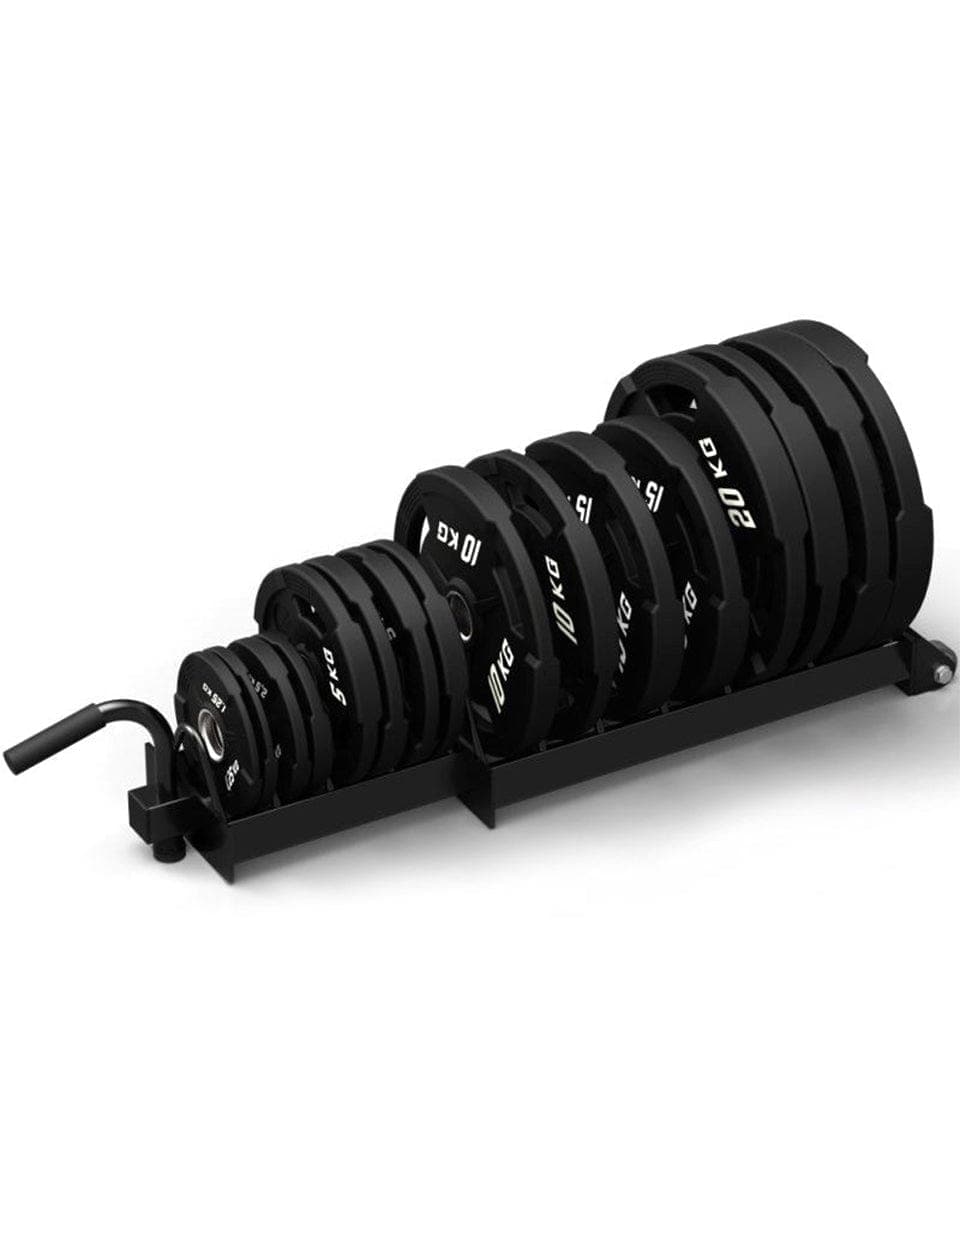 PRSAE Racks 1441 Fitness Weight Plate Trolley - 41FWG209